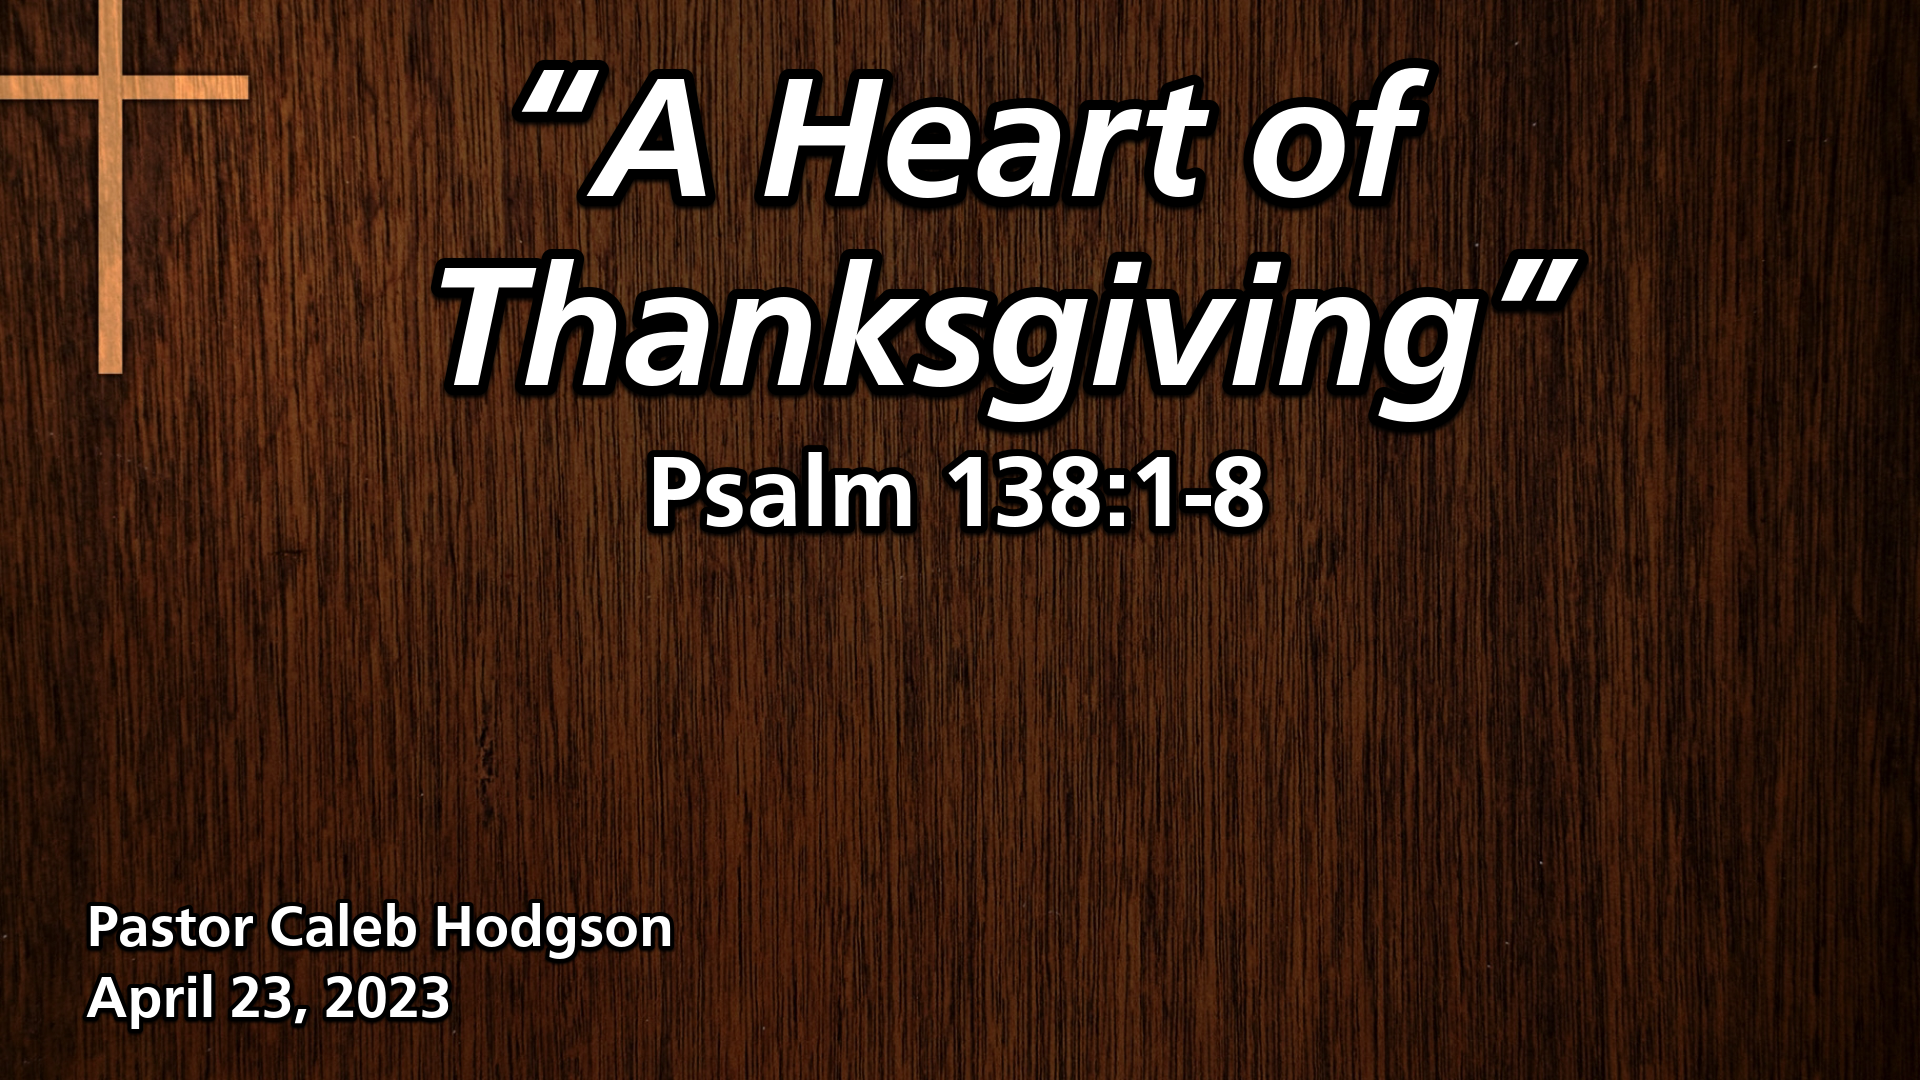 “A Heart of Thanksgiving”